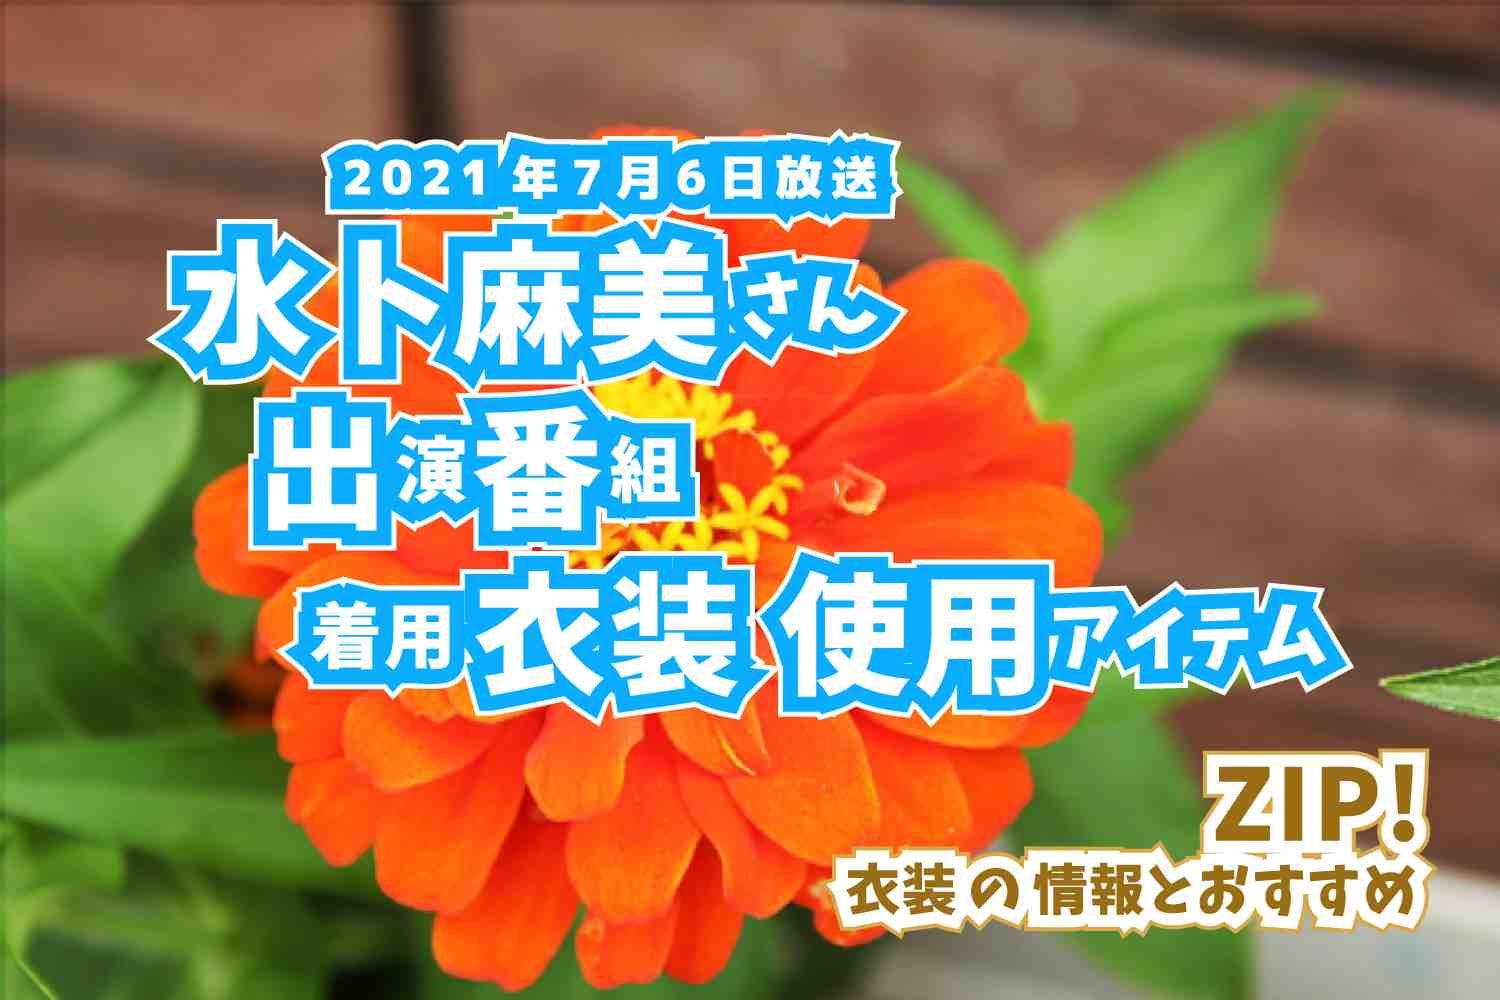 ZIP!　水卜麻美さん　番組　衣装　2021年7月6日放送